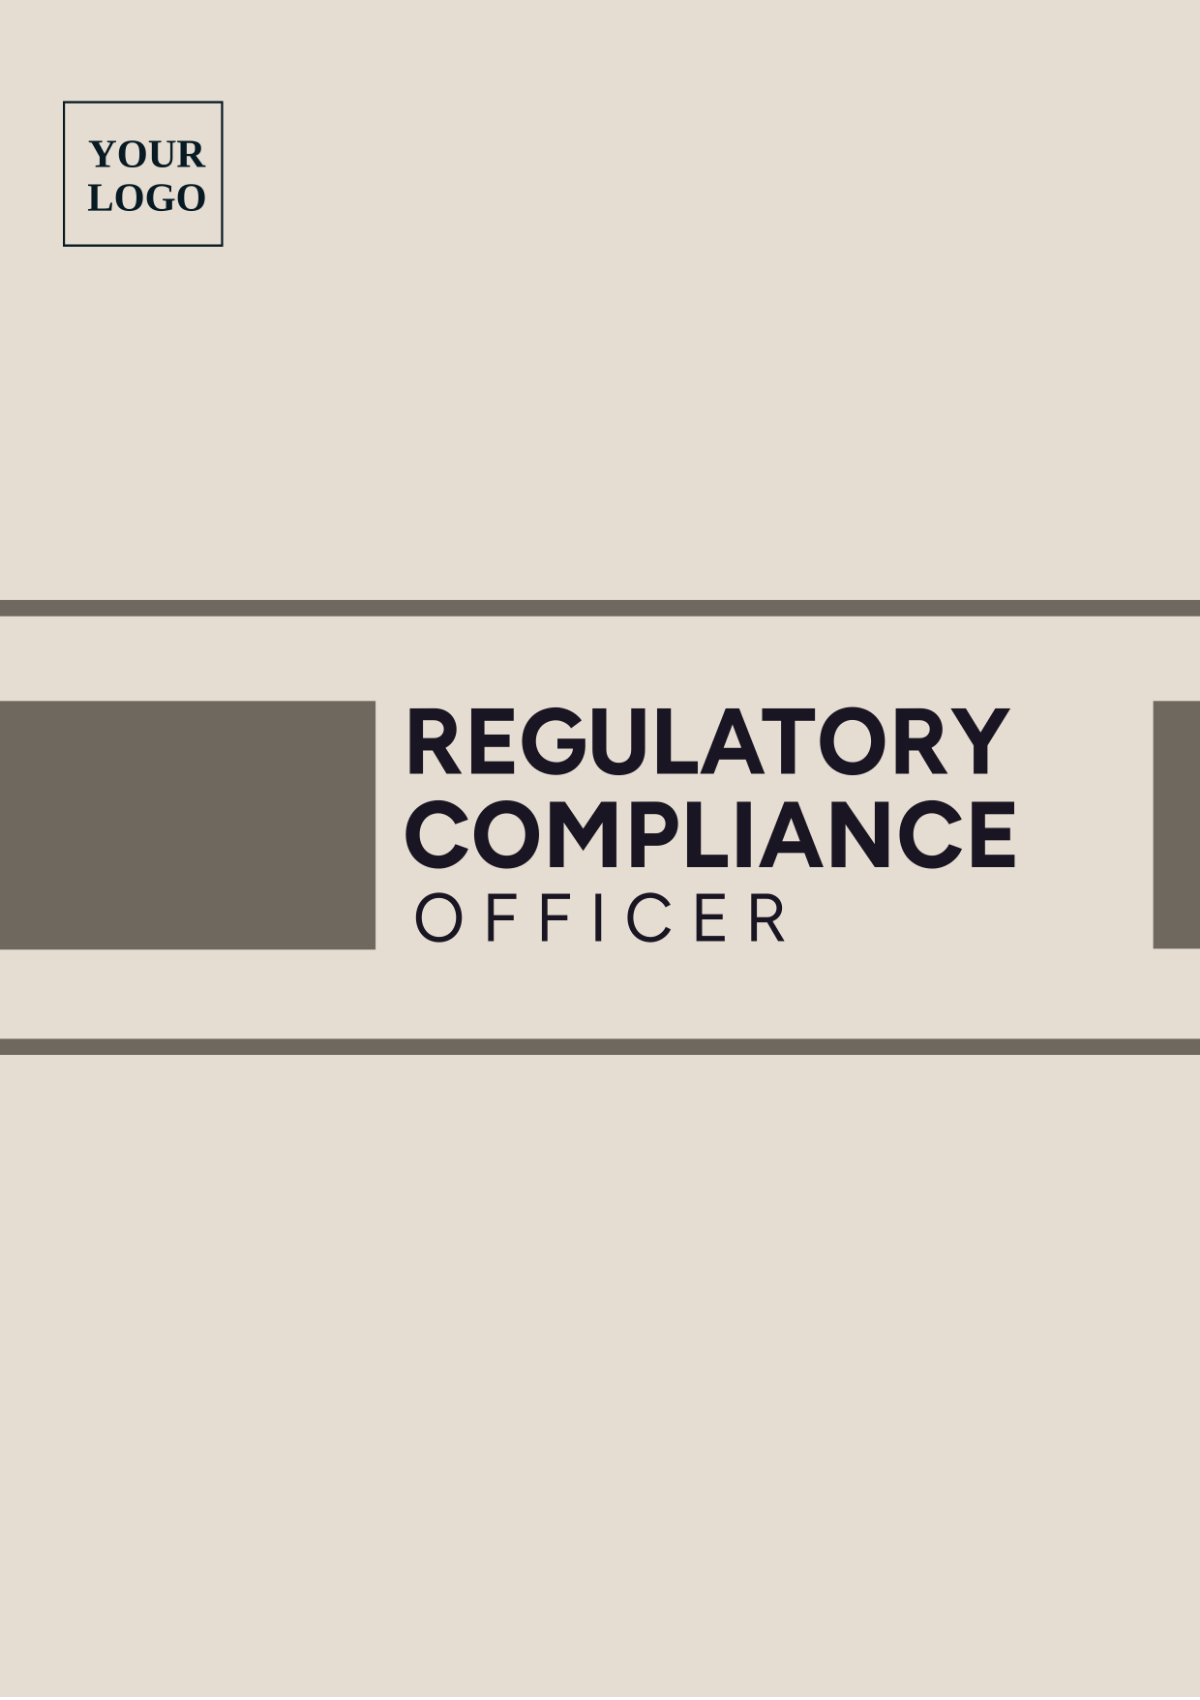 Free Regulatory Compliance Officer Template